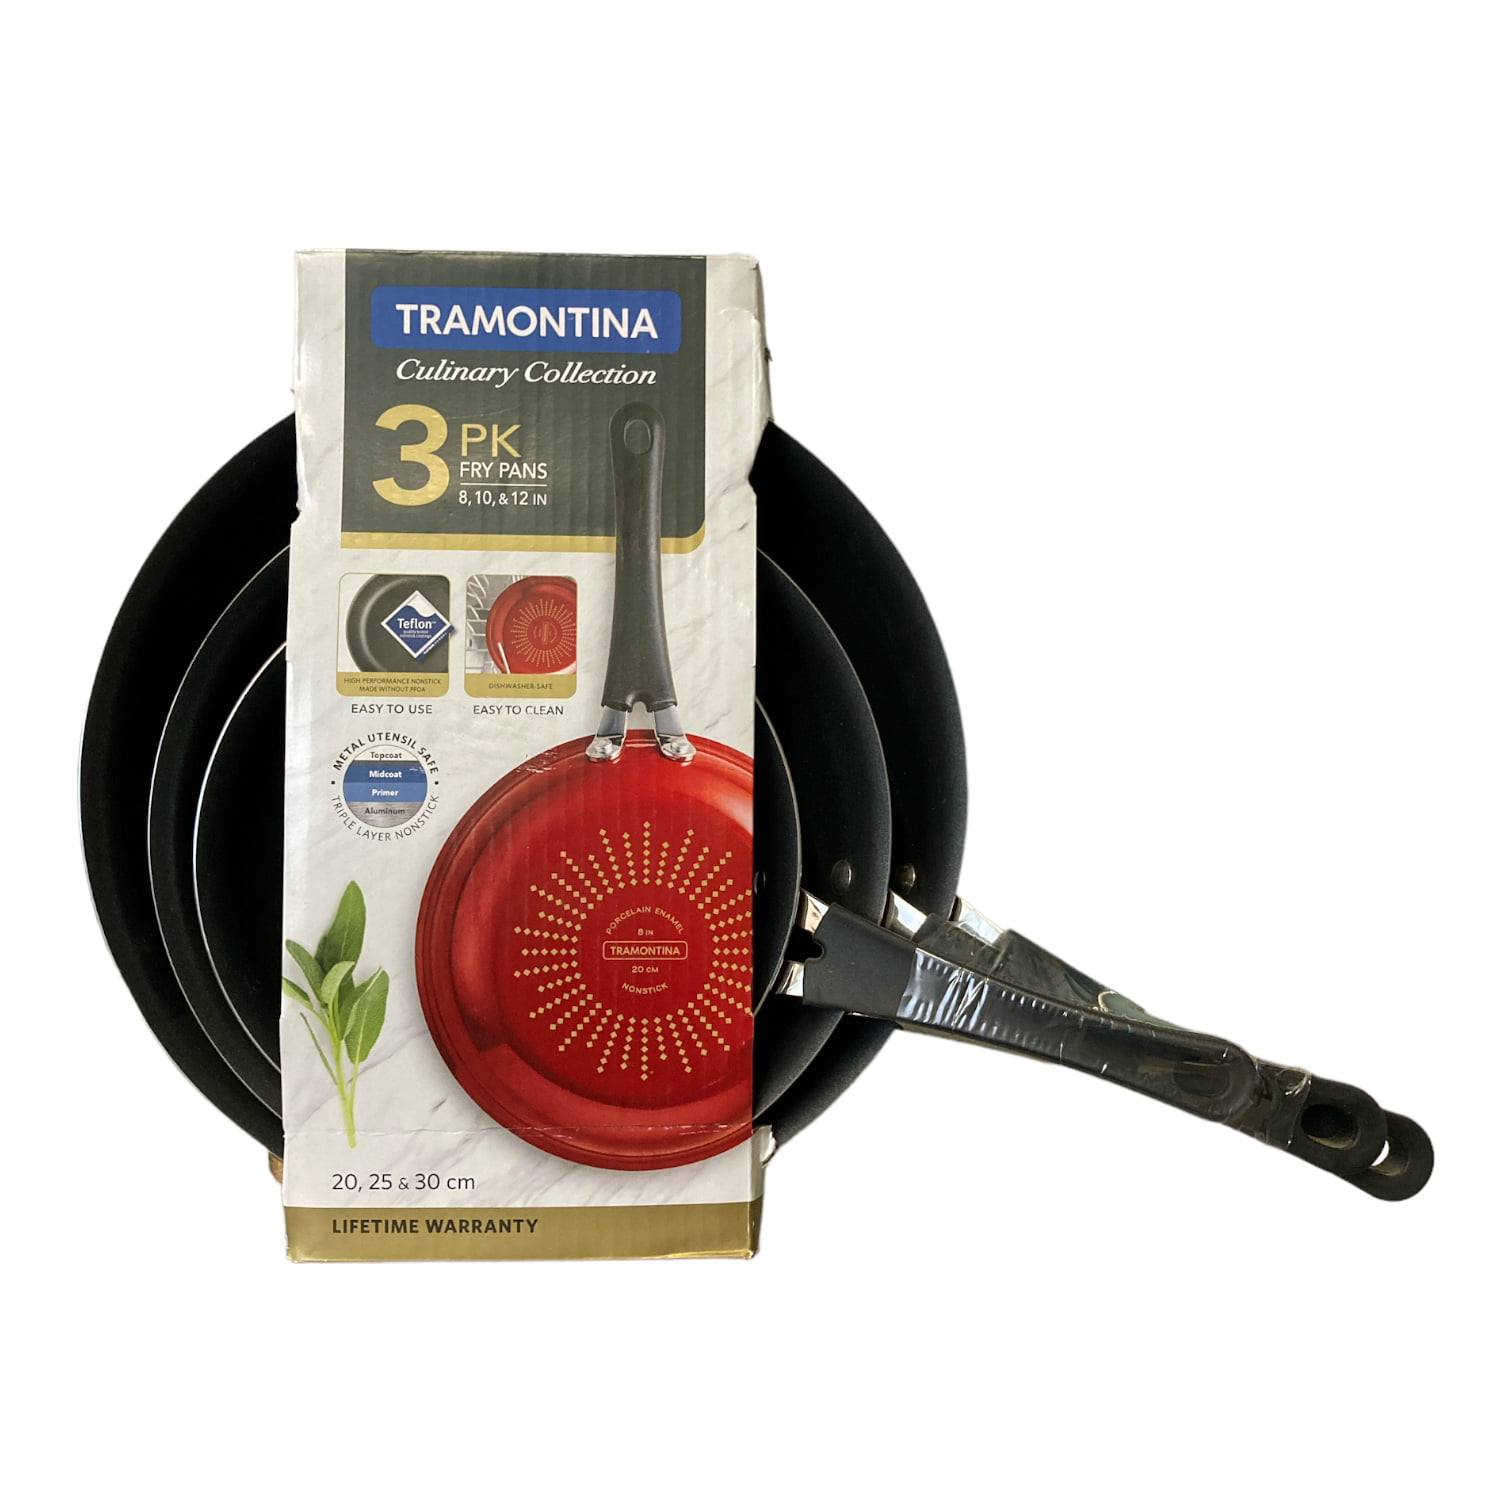  Tramontina 3 Pk Nonstick Fry Pan Set Aluminum (Gray),  80156/061DS: Home & Kitchen